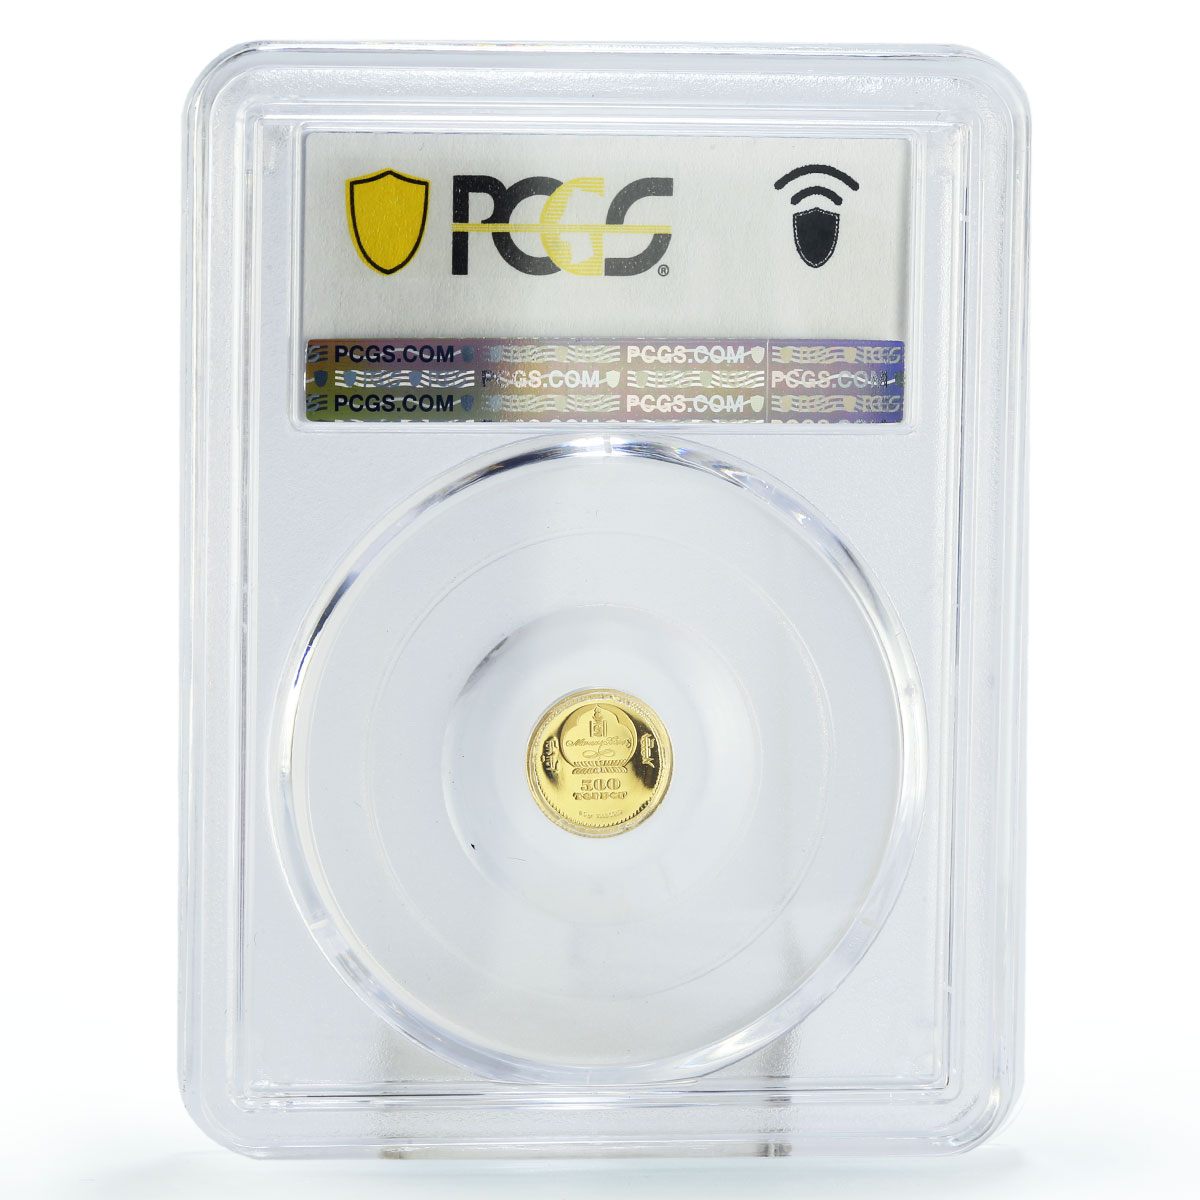 Mongolia 500 togrog Leonardo Da Vinci Vitruvian Man PR69 PCGS gold coin 2006